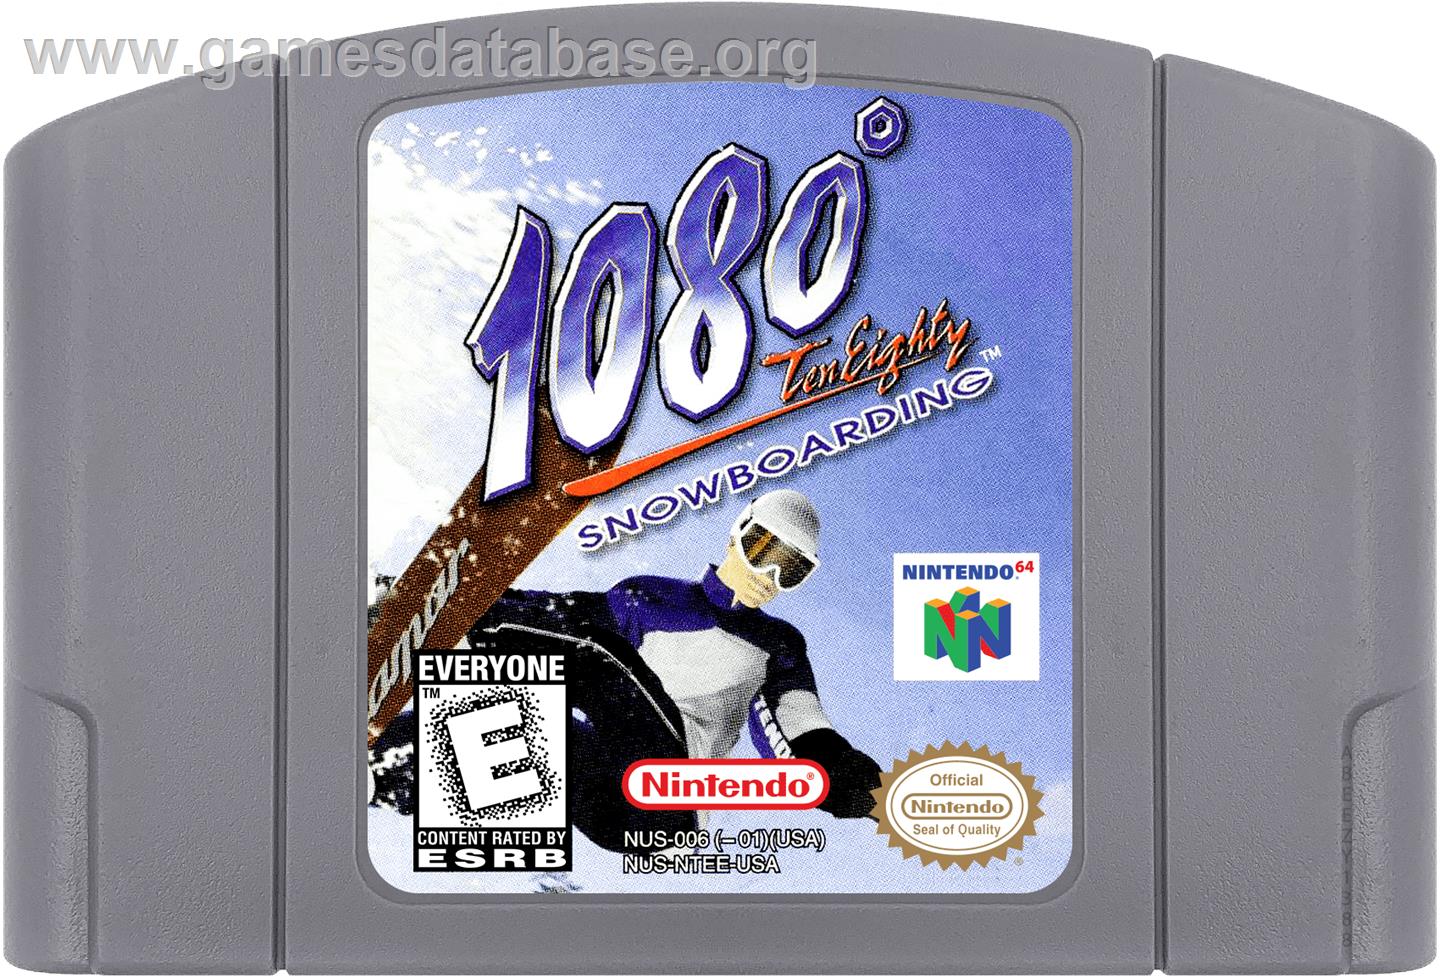 1080° Snowboarding - Nintendo N64 - Artwork - Cartridge